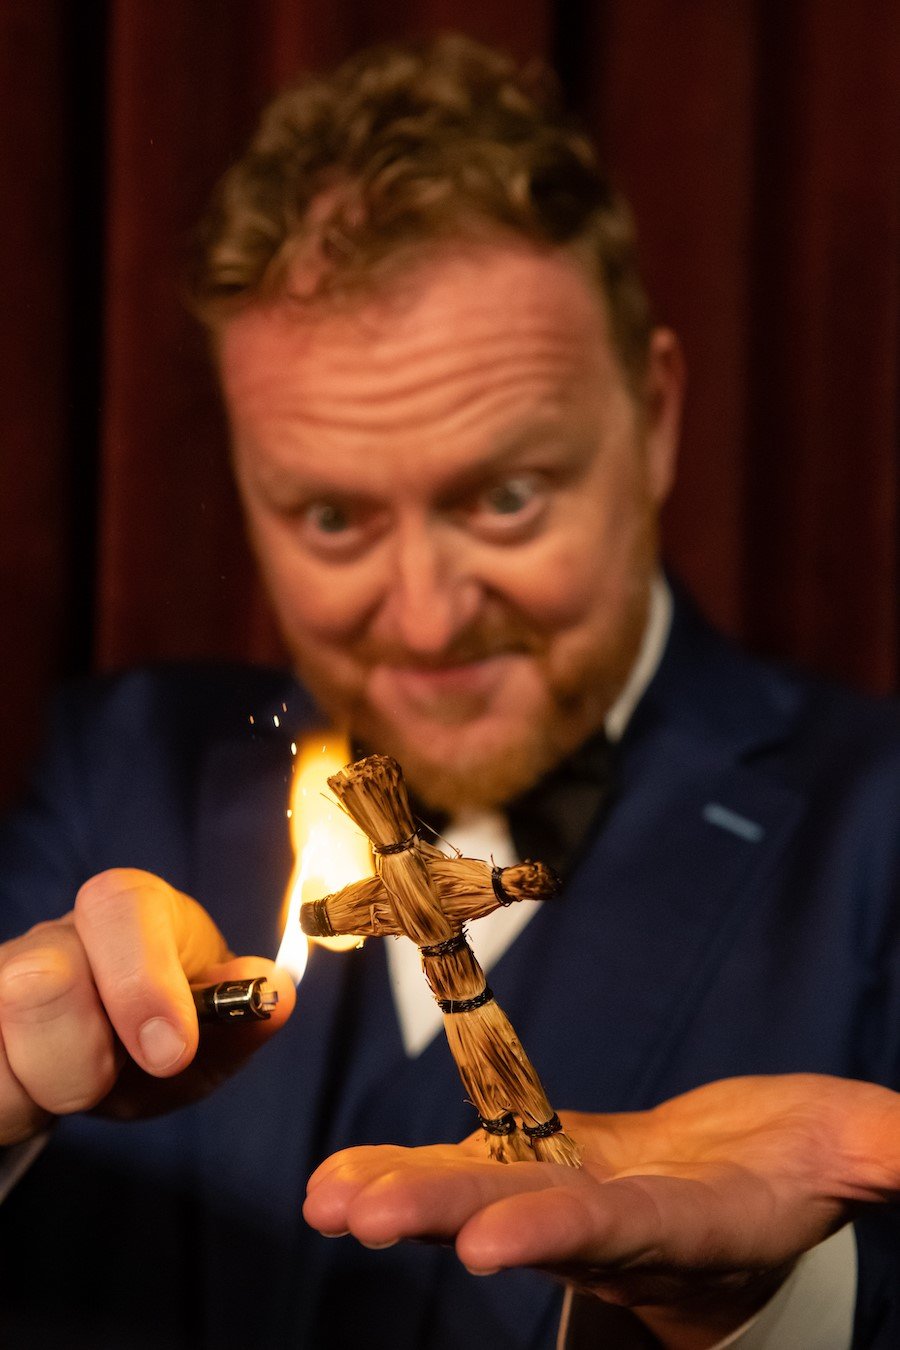 Magician Bill Abbott burns an effigy of an audience volunteer with surprising results.